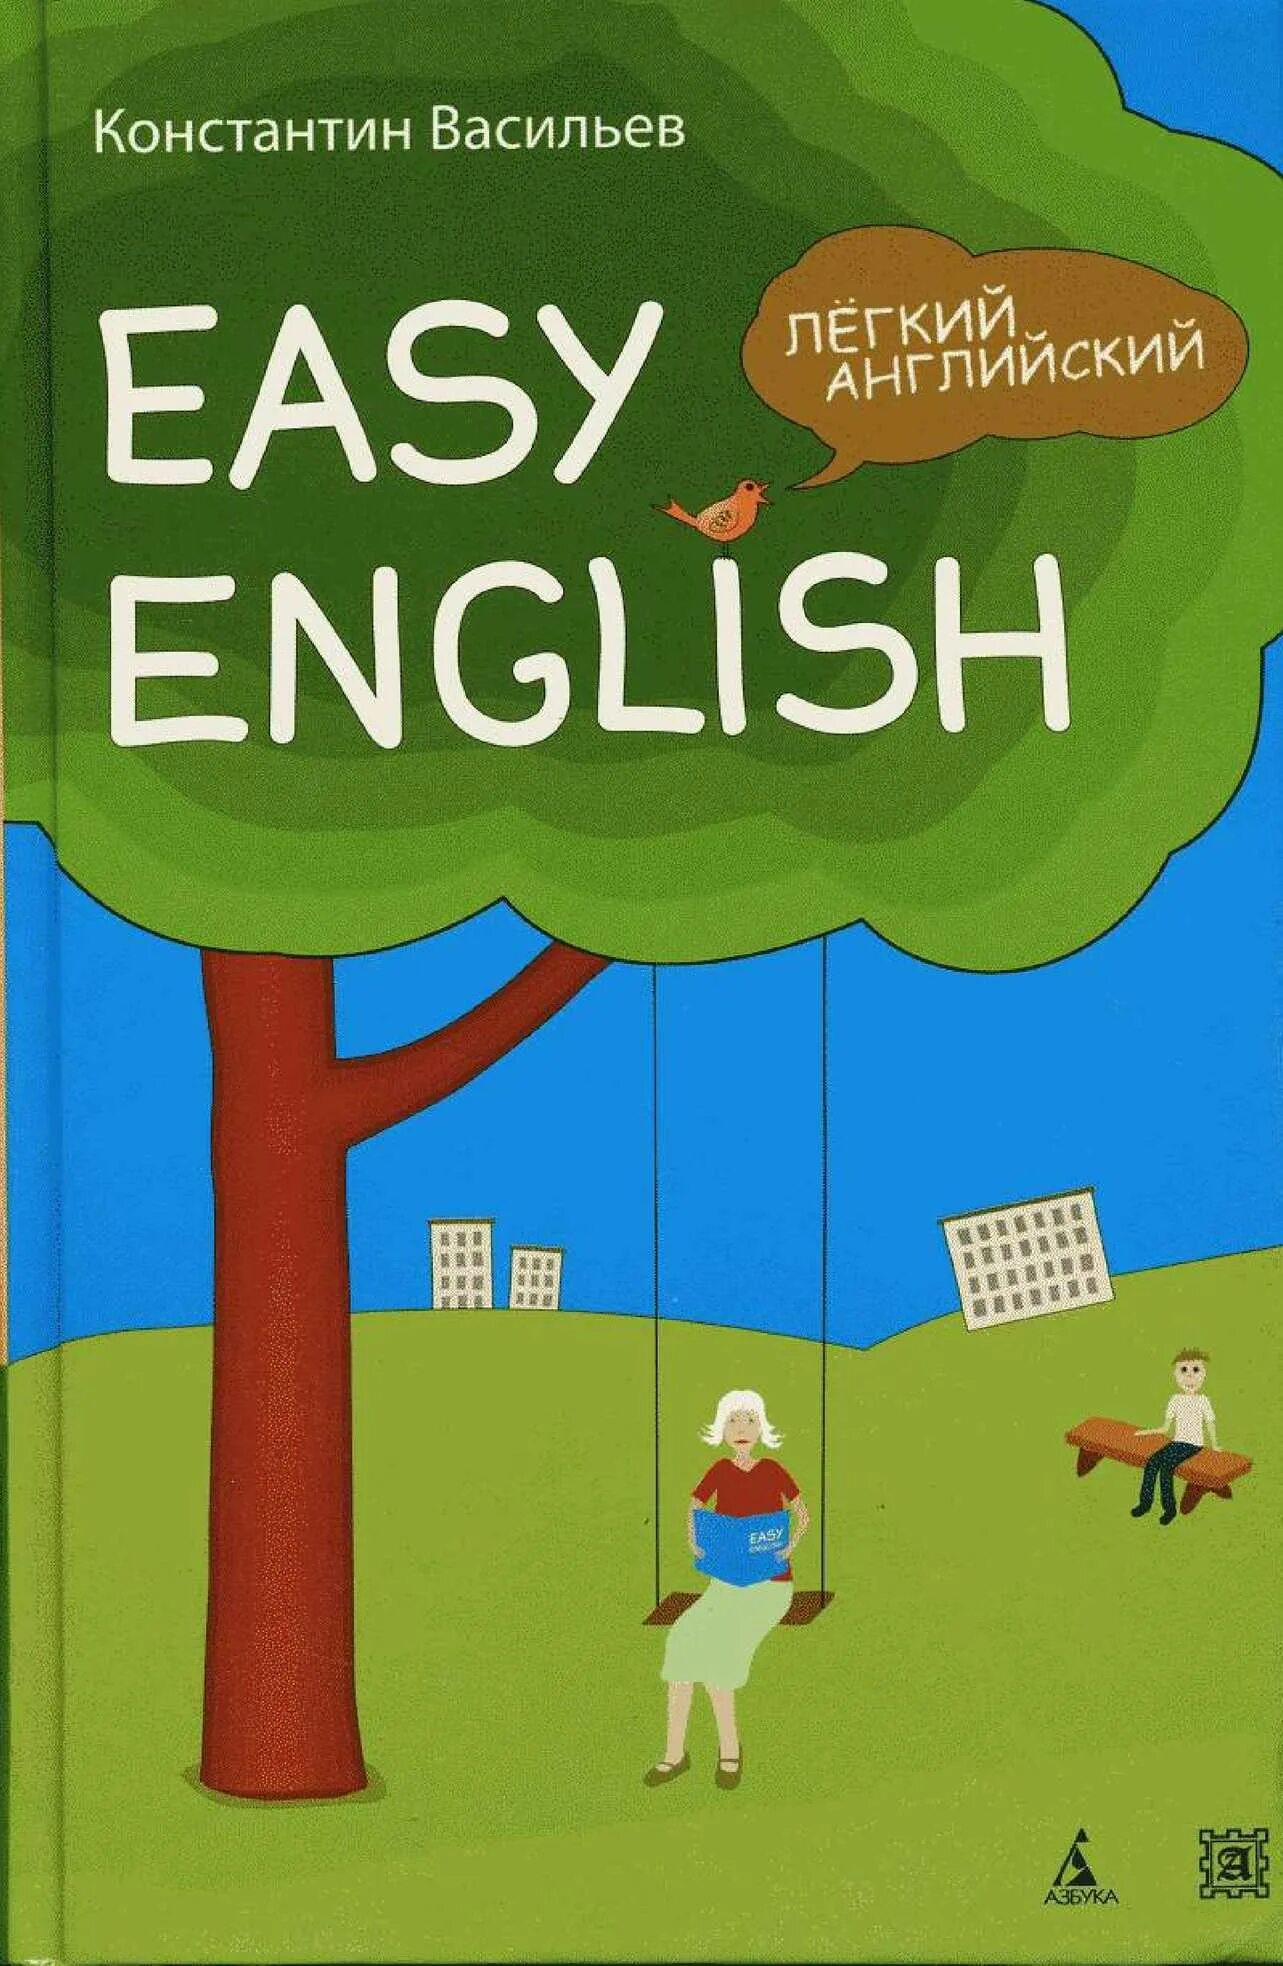 Easy легкий. Easy English книга. Легкий английский. Васильева английский язык. # English - легко!.